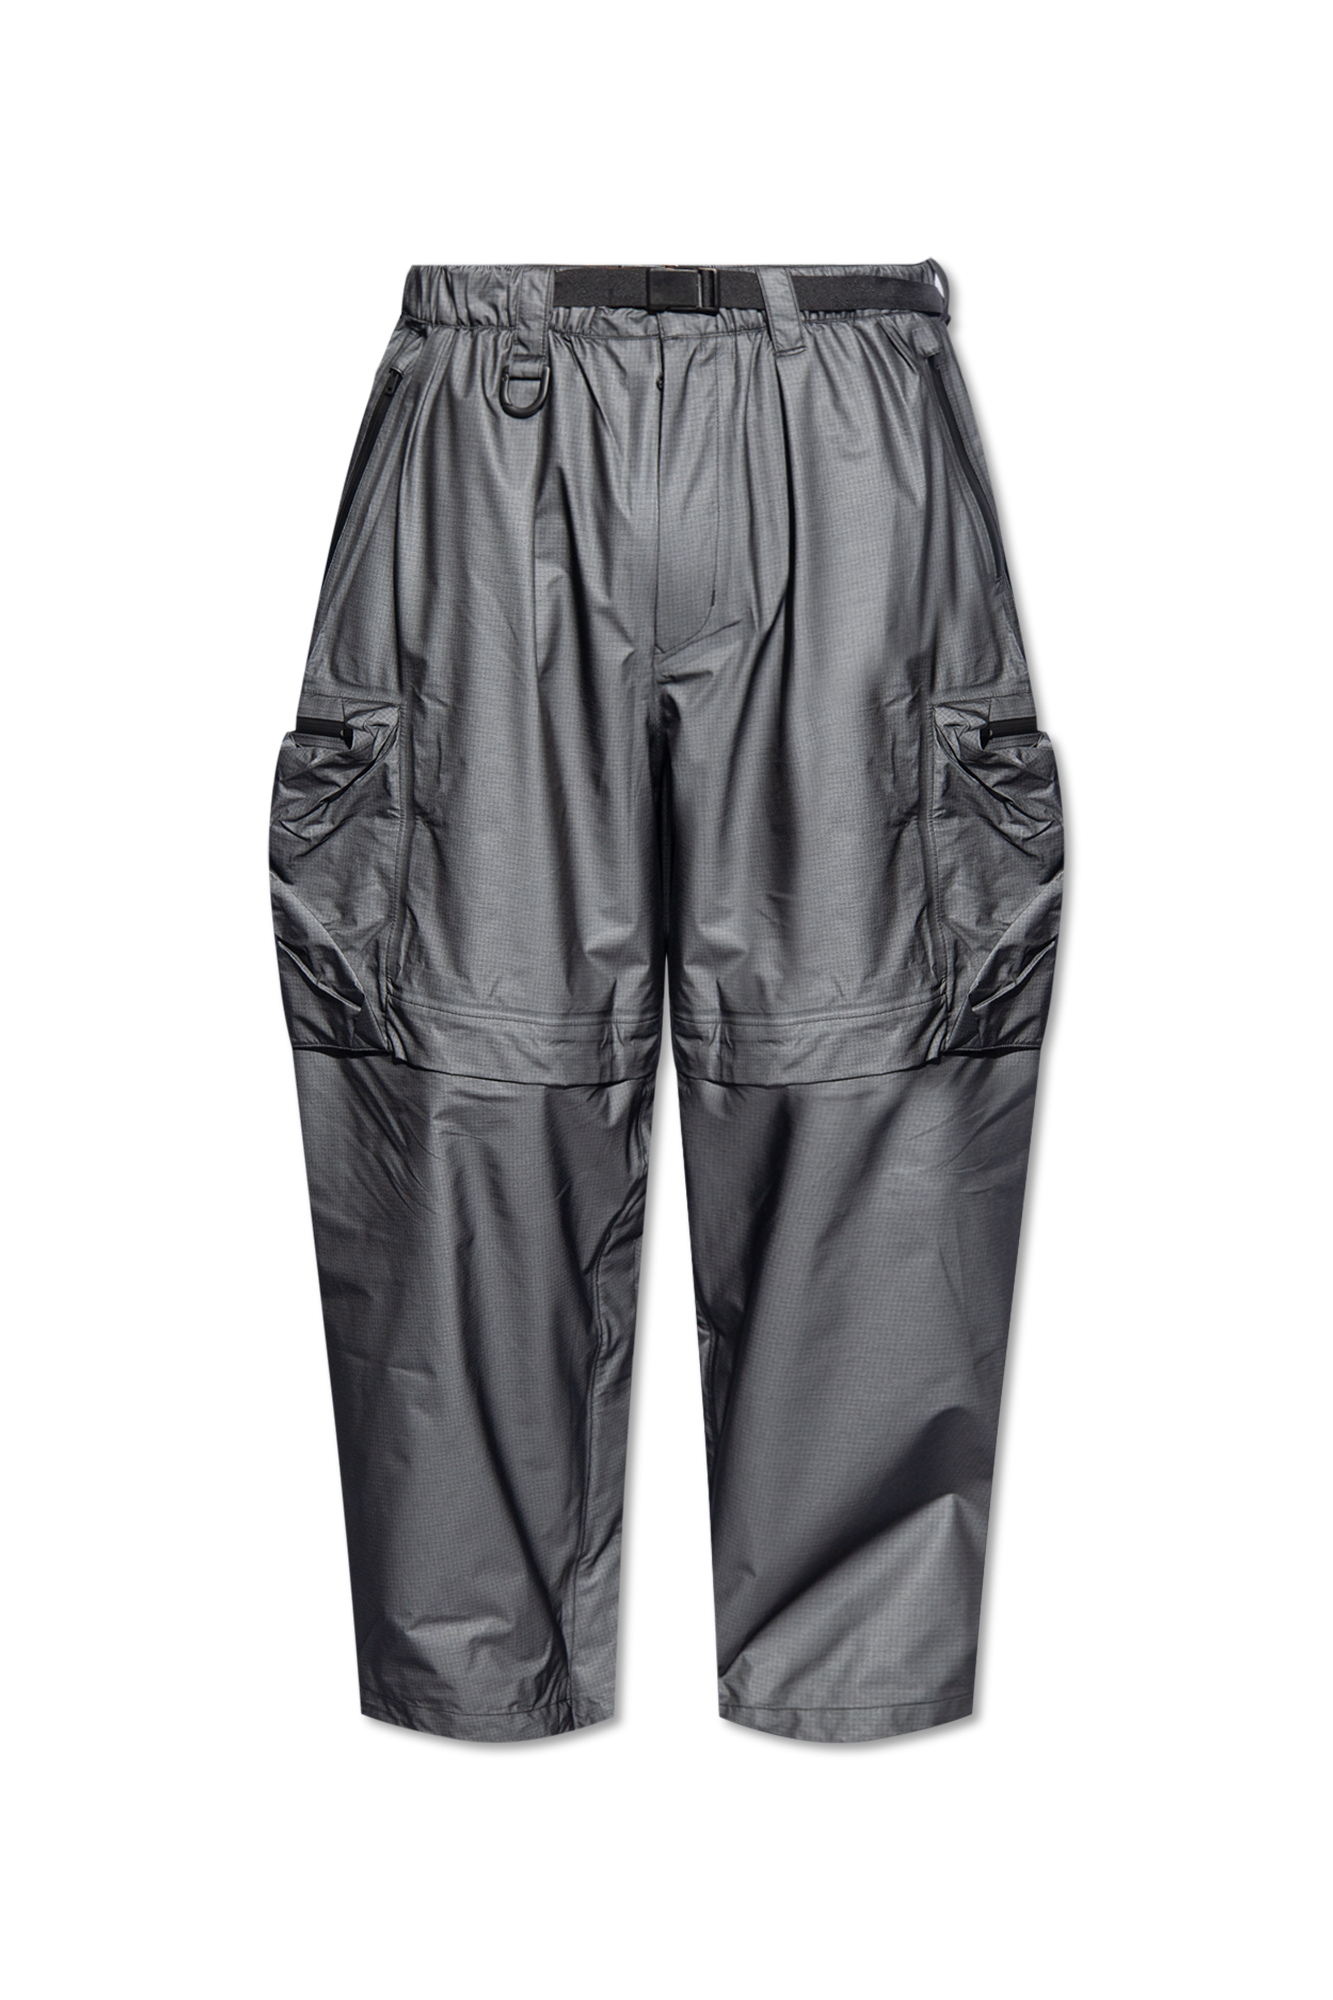 Y-3 Yohji Yamamoto Cargo trousers